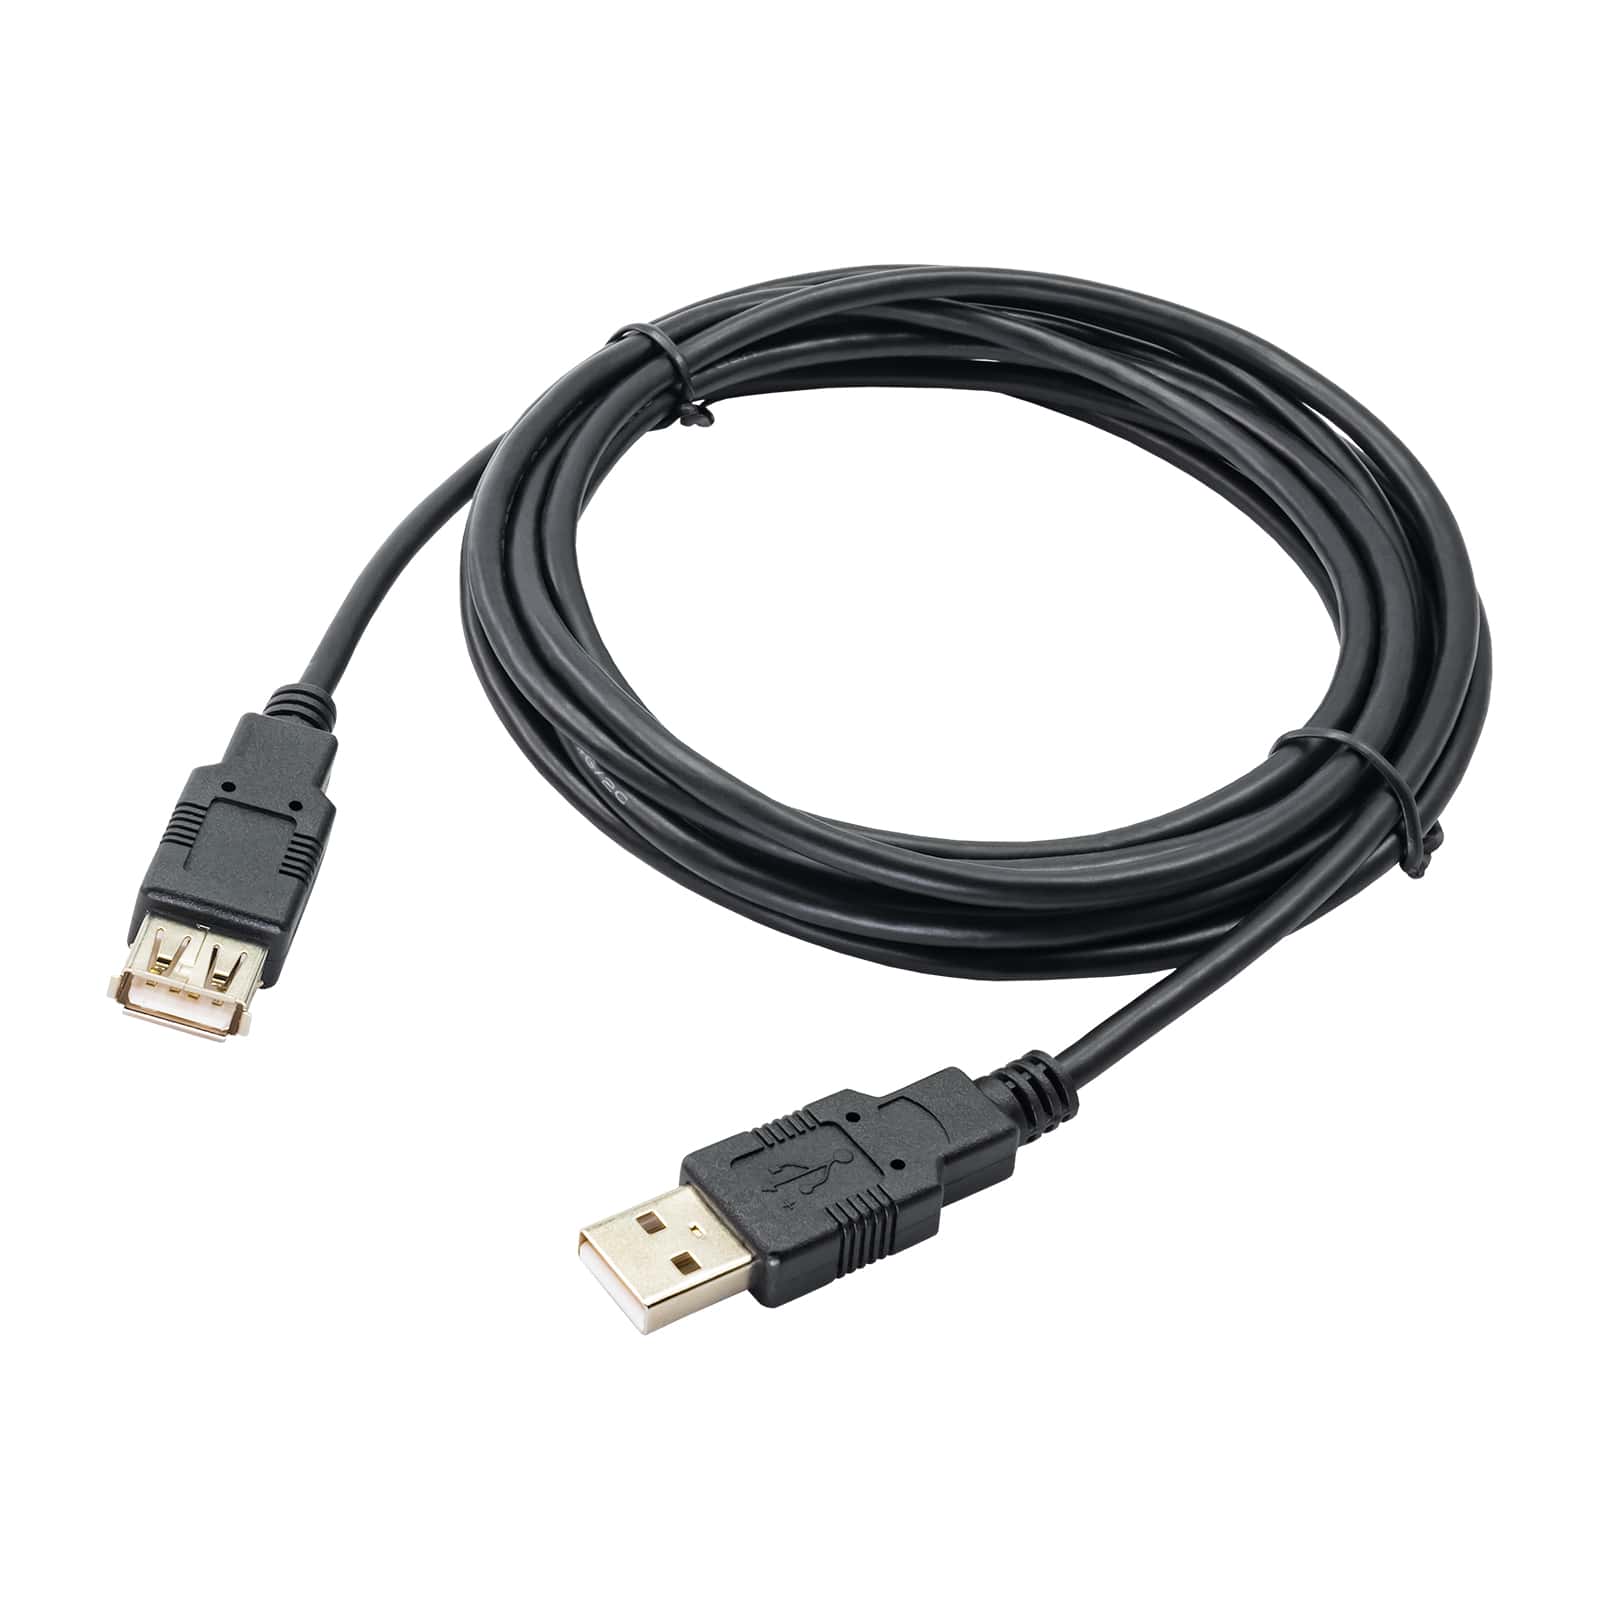 USB 2.0 AM to AF Extension Cable USB SKU : 30cm Length: 30cm USB cables 